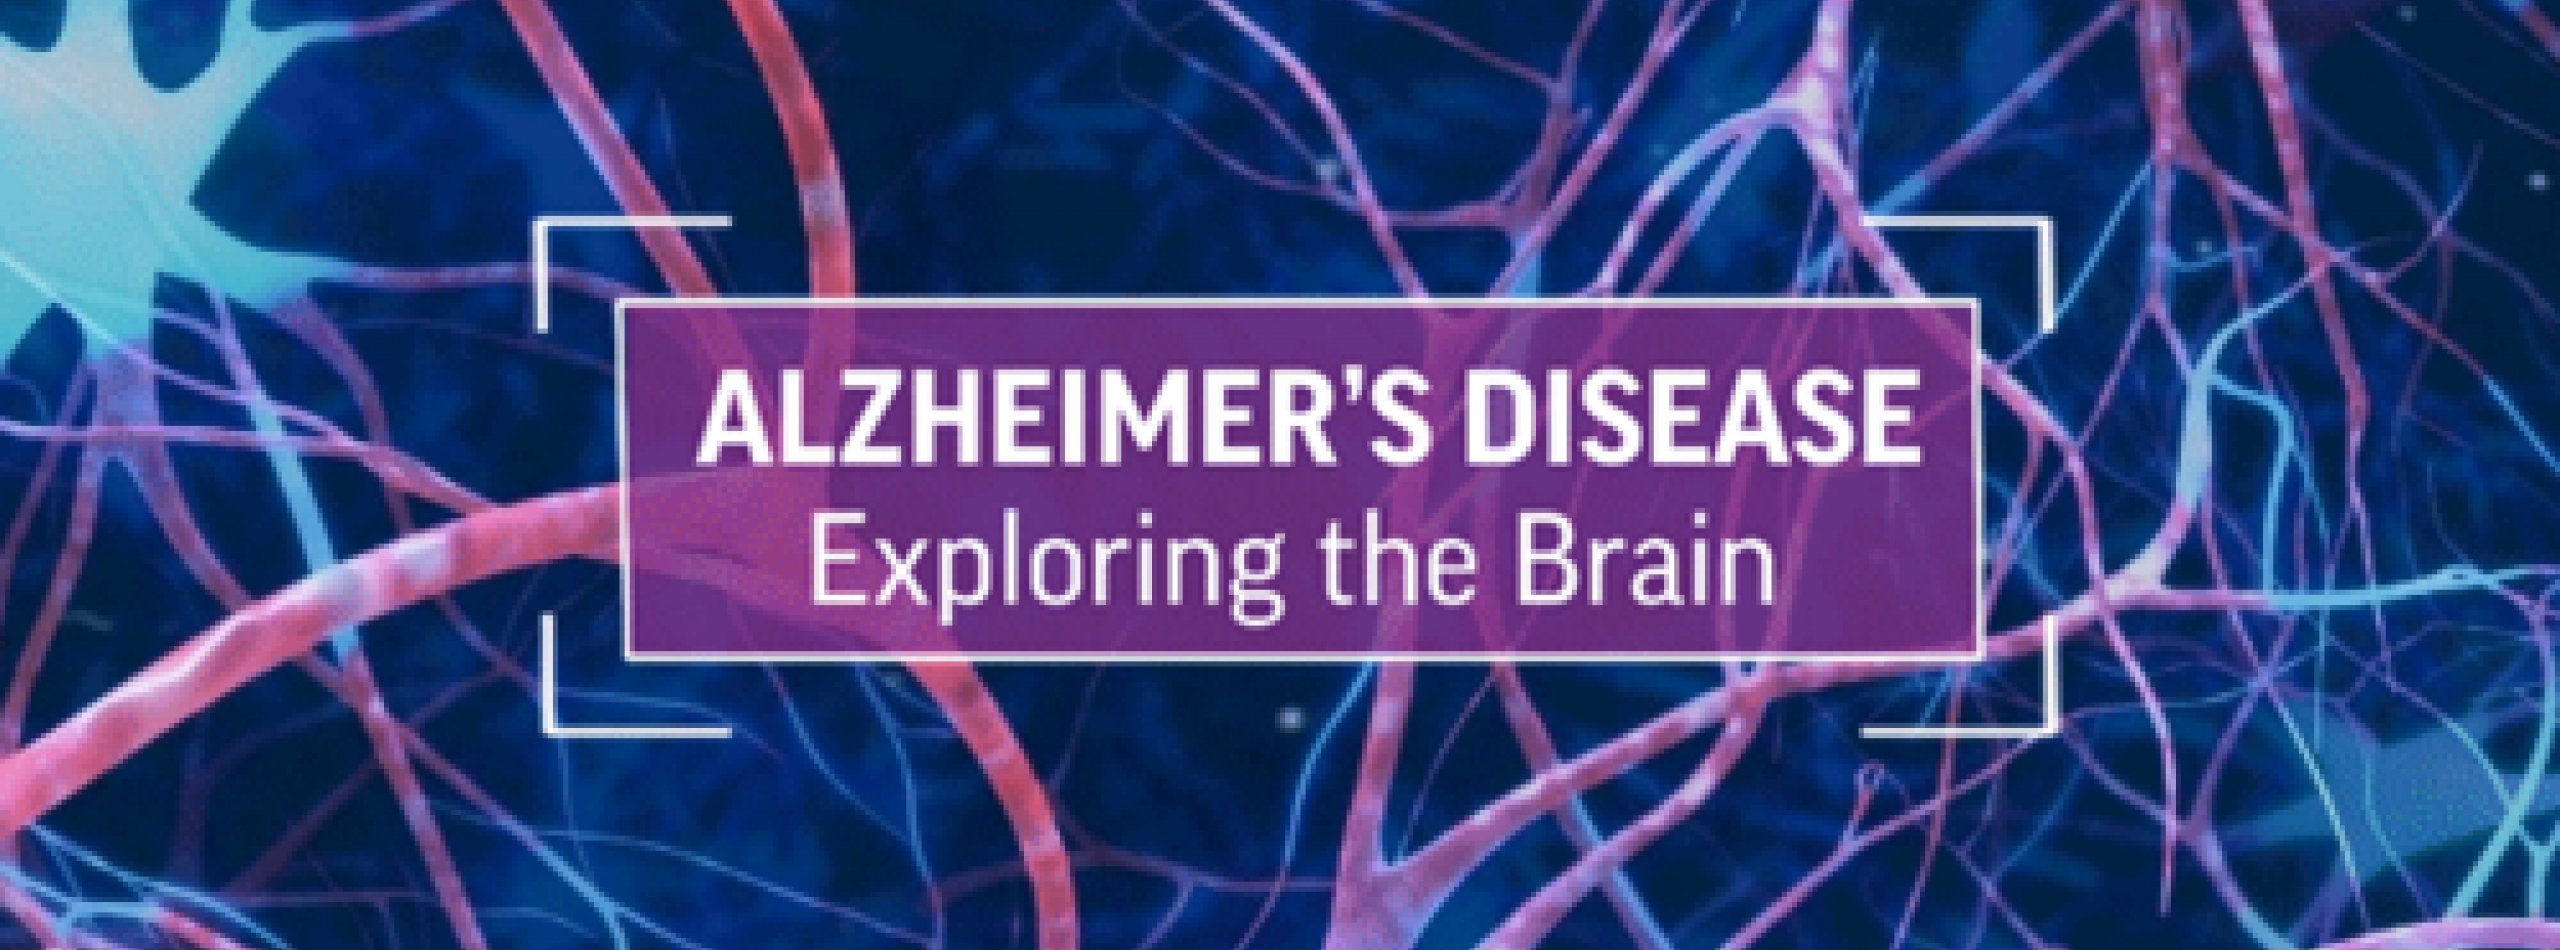 Alzheimer’s Disease: Exploring the Brain